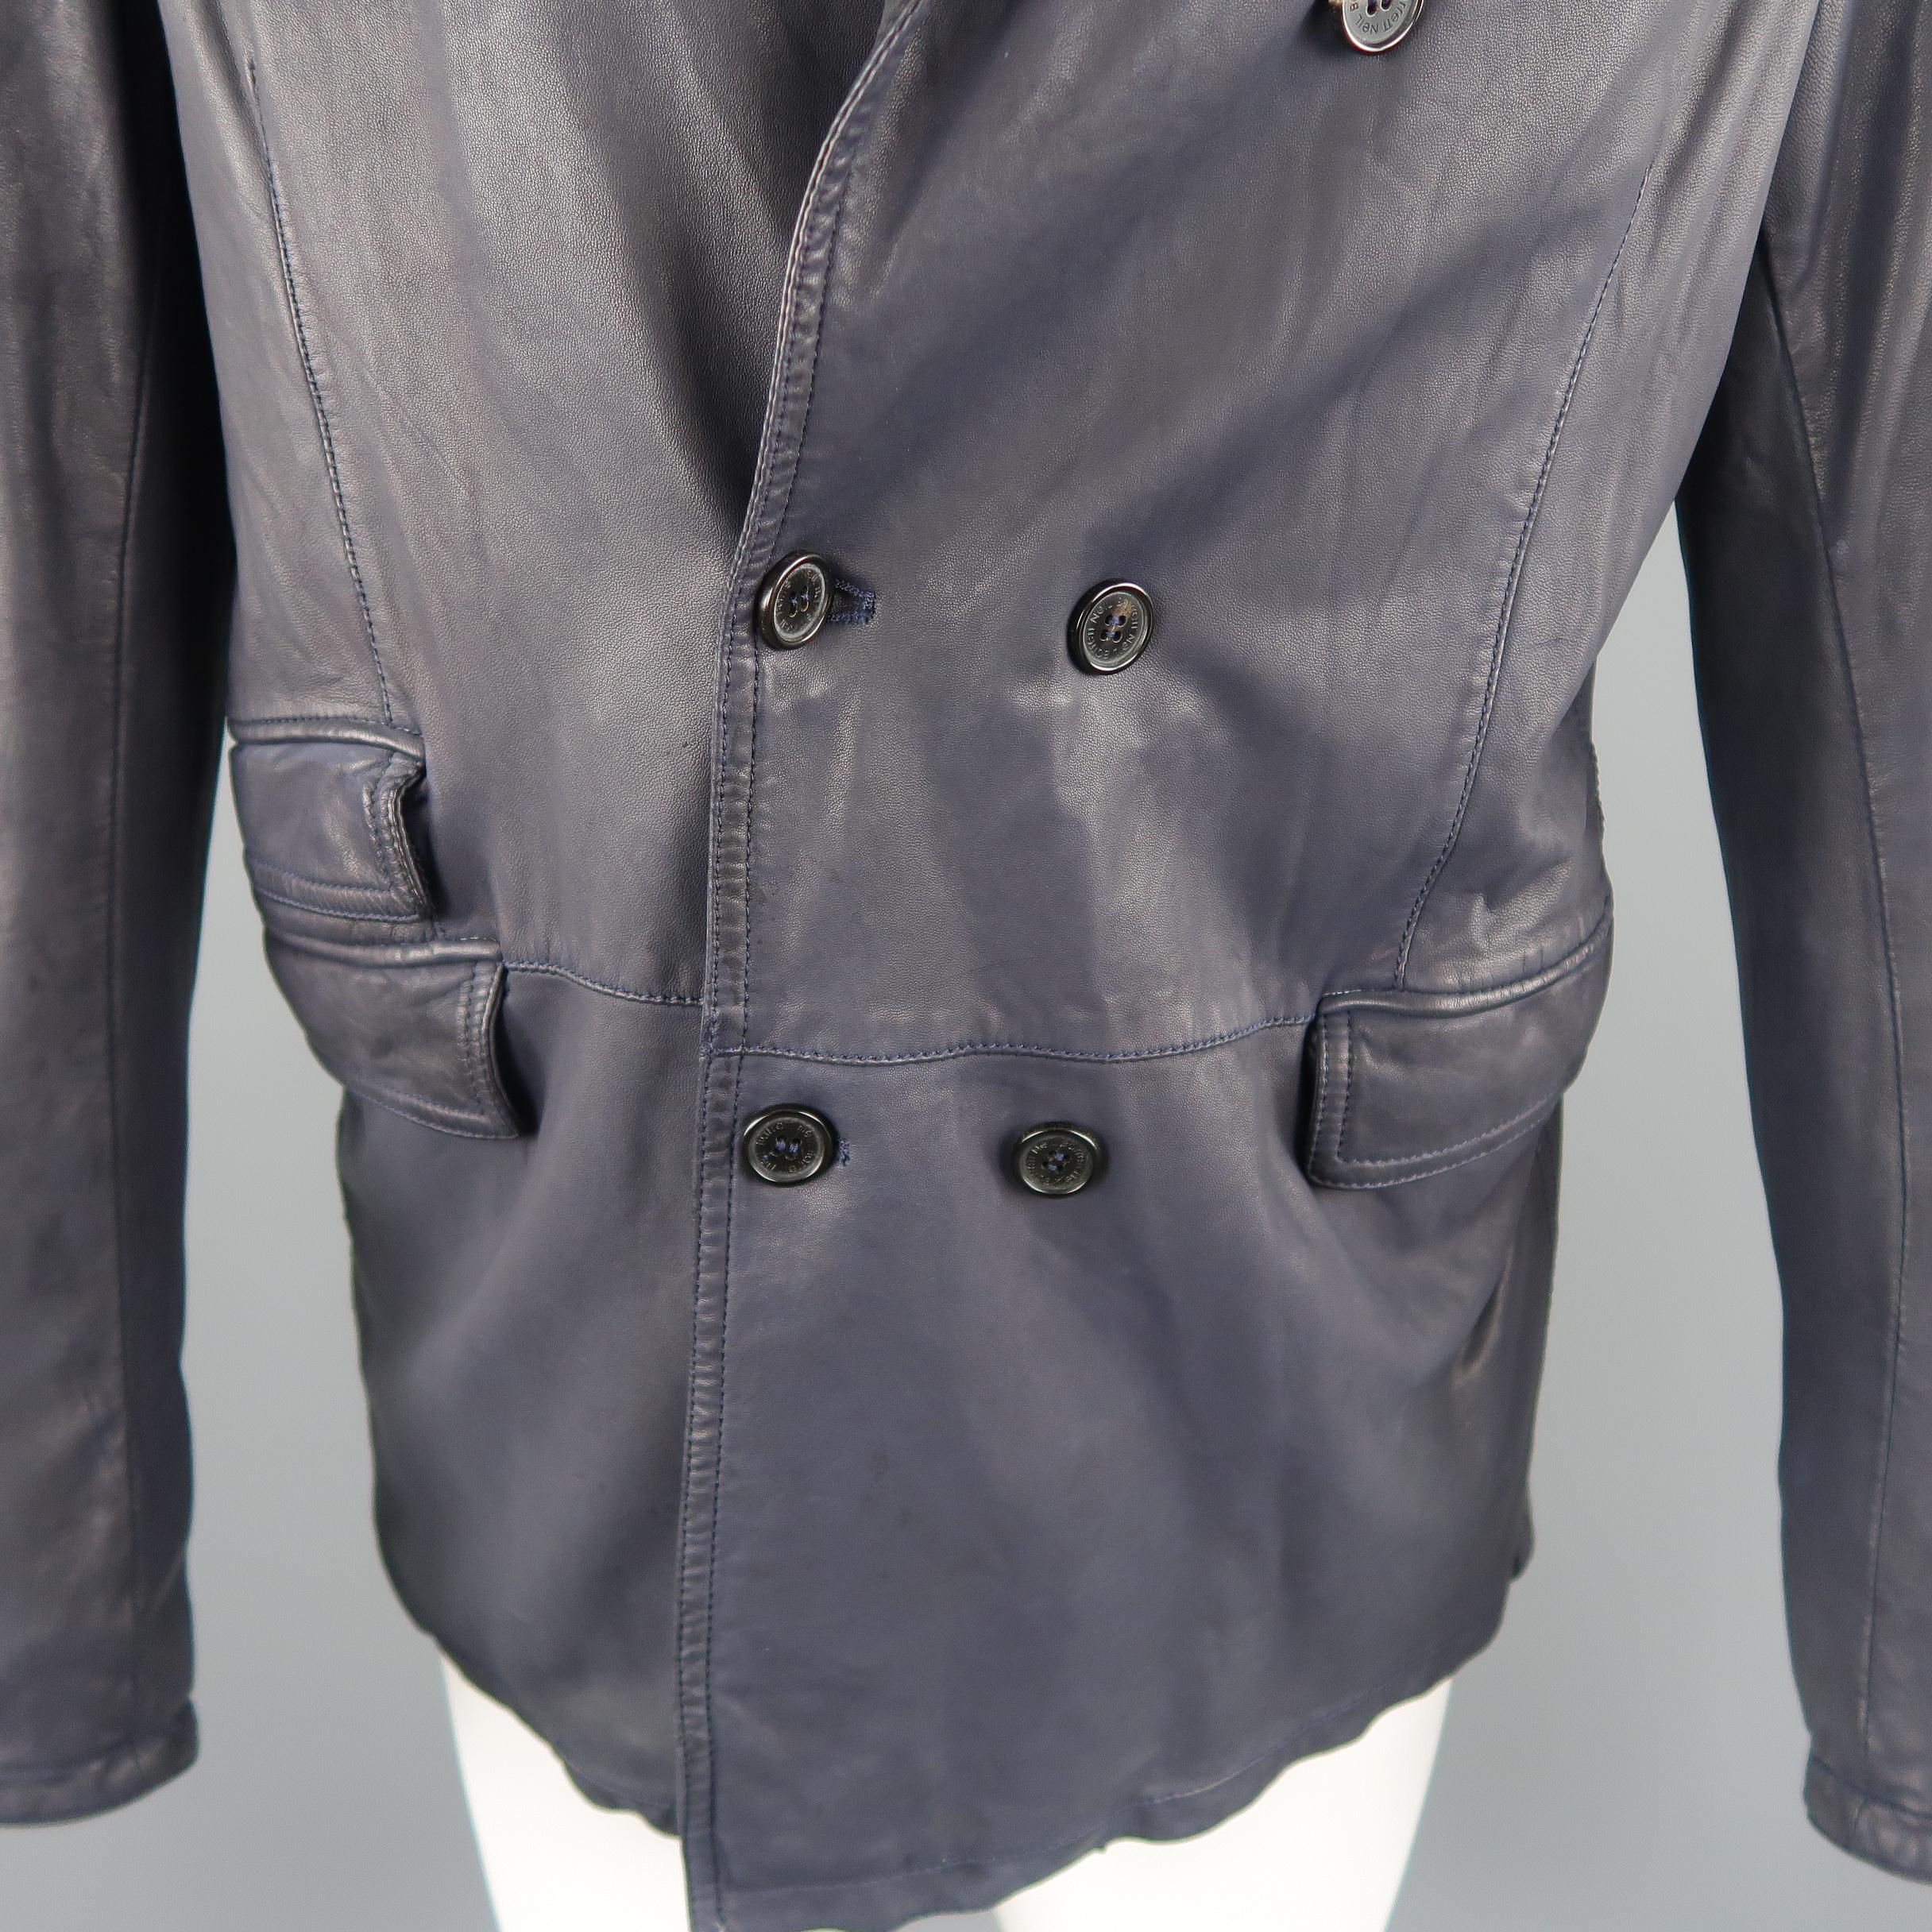 Black NEIL BARRETT Jacket M Navy Leather Double Breasted Sport Coat Jacket